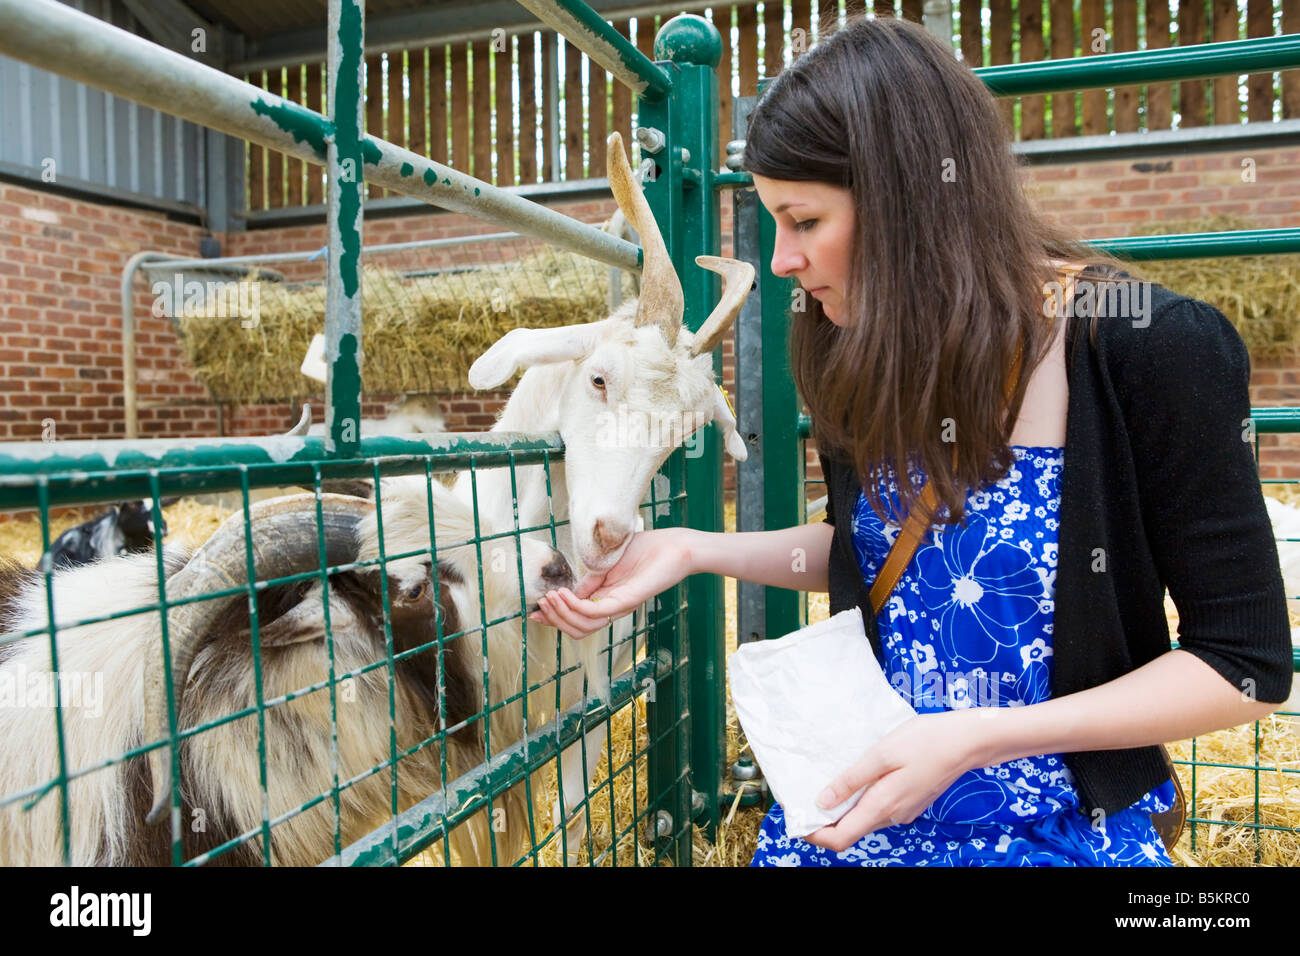 A young woman feeding animals on a farm Stock Photo - Alamy